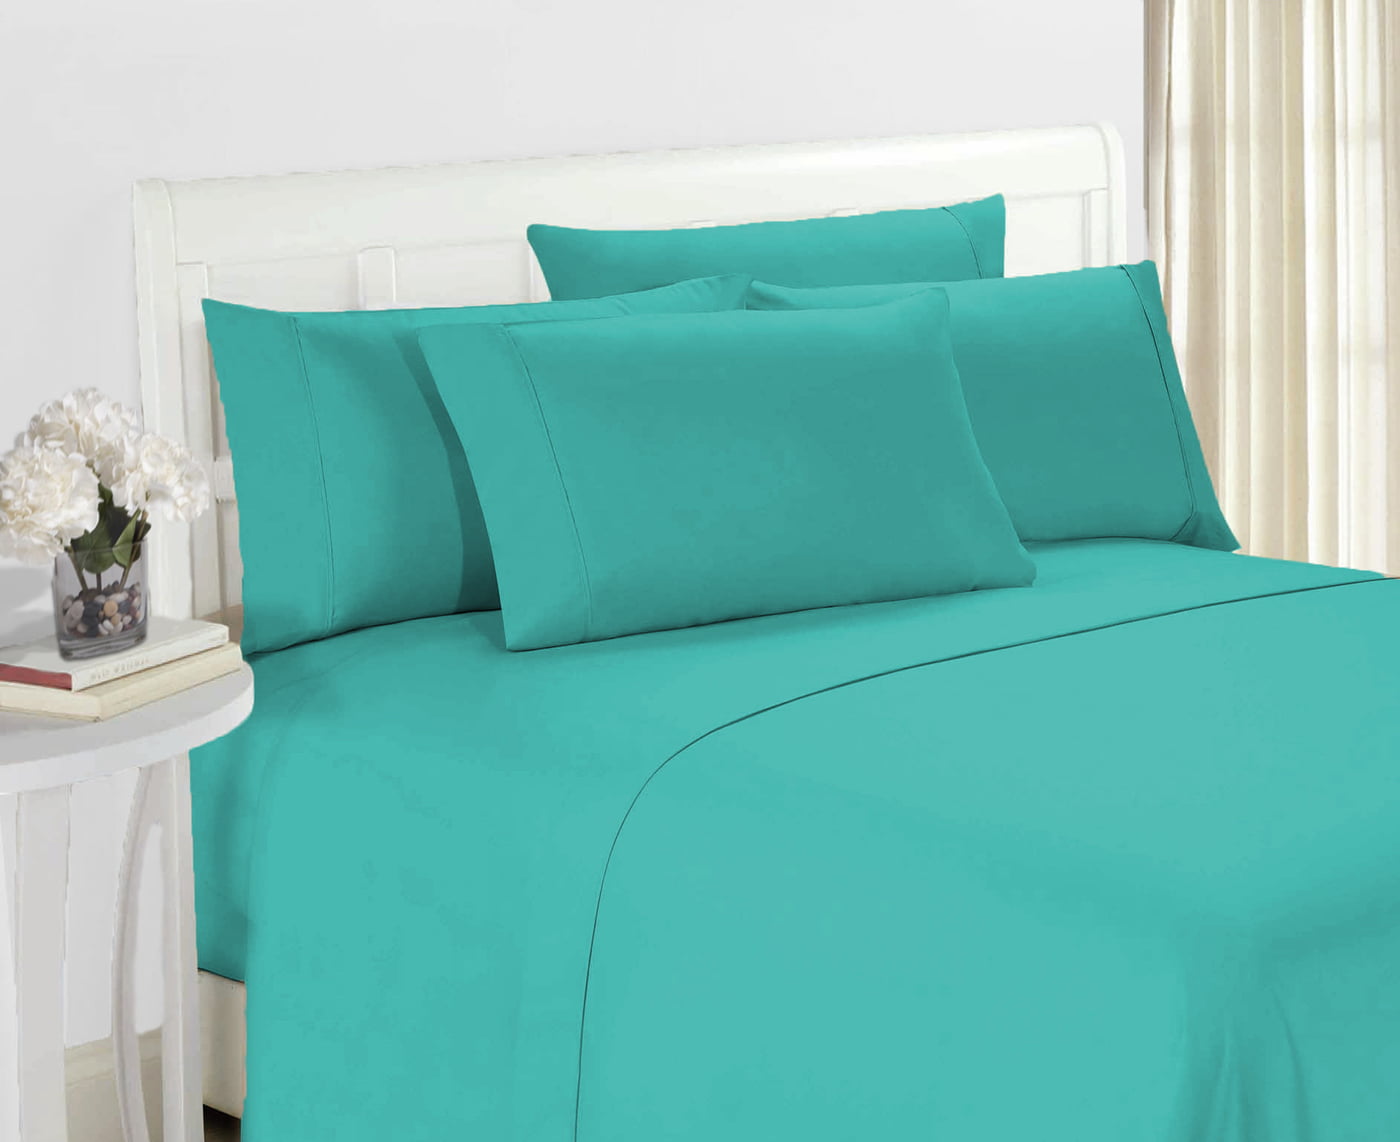 Hotel Super Soft 6 Piece Bed Sheet Set Deep Pockets Bedding All Colors Sizes